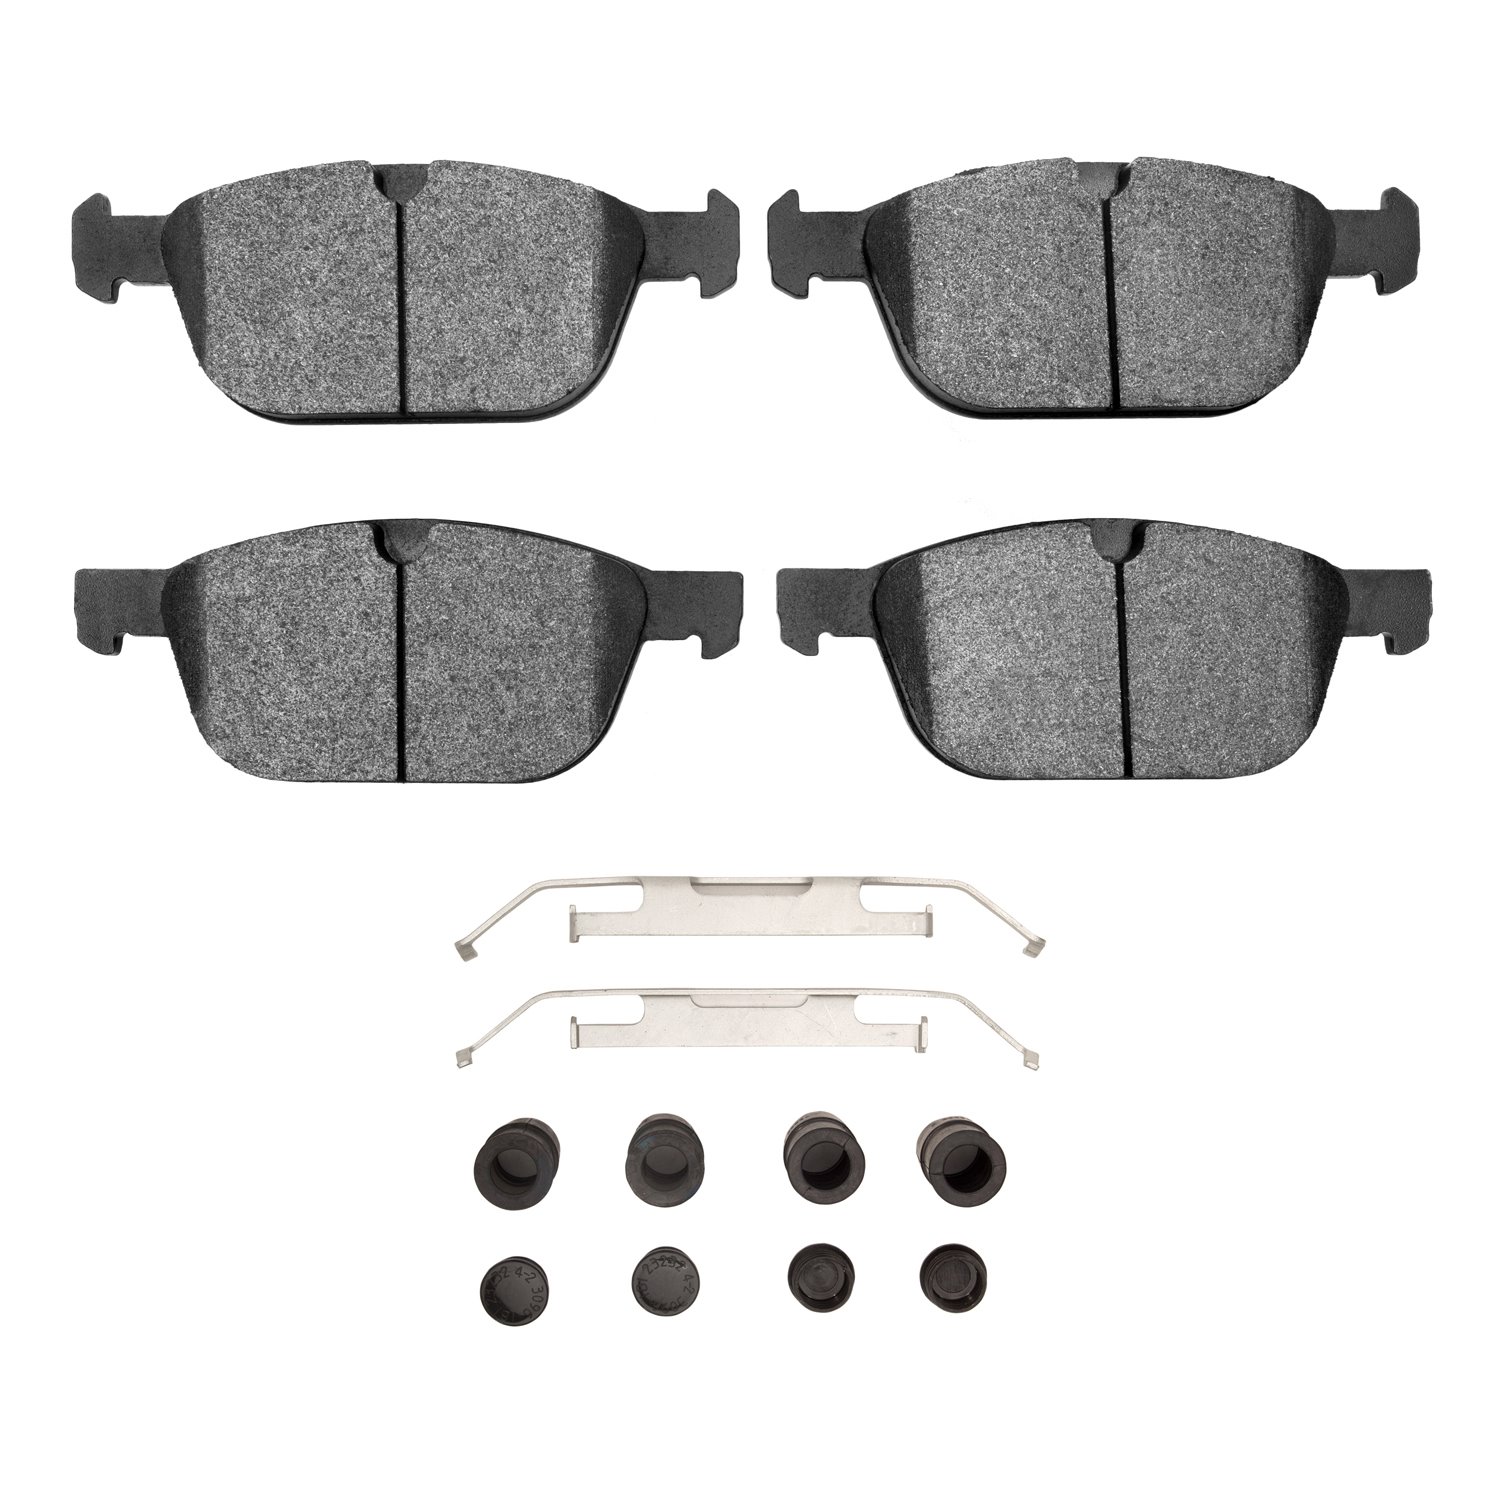 1552-1412-01 5000 Advanced Low-Metallic Brake Pads & Hardware Kit, 2003-2014 Volvo, Position: Front